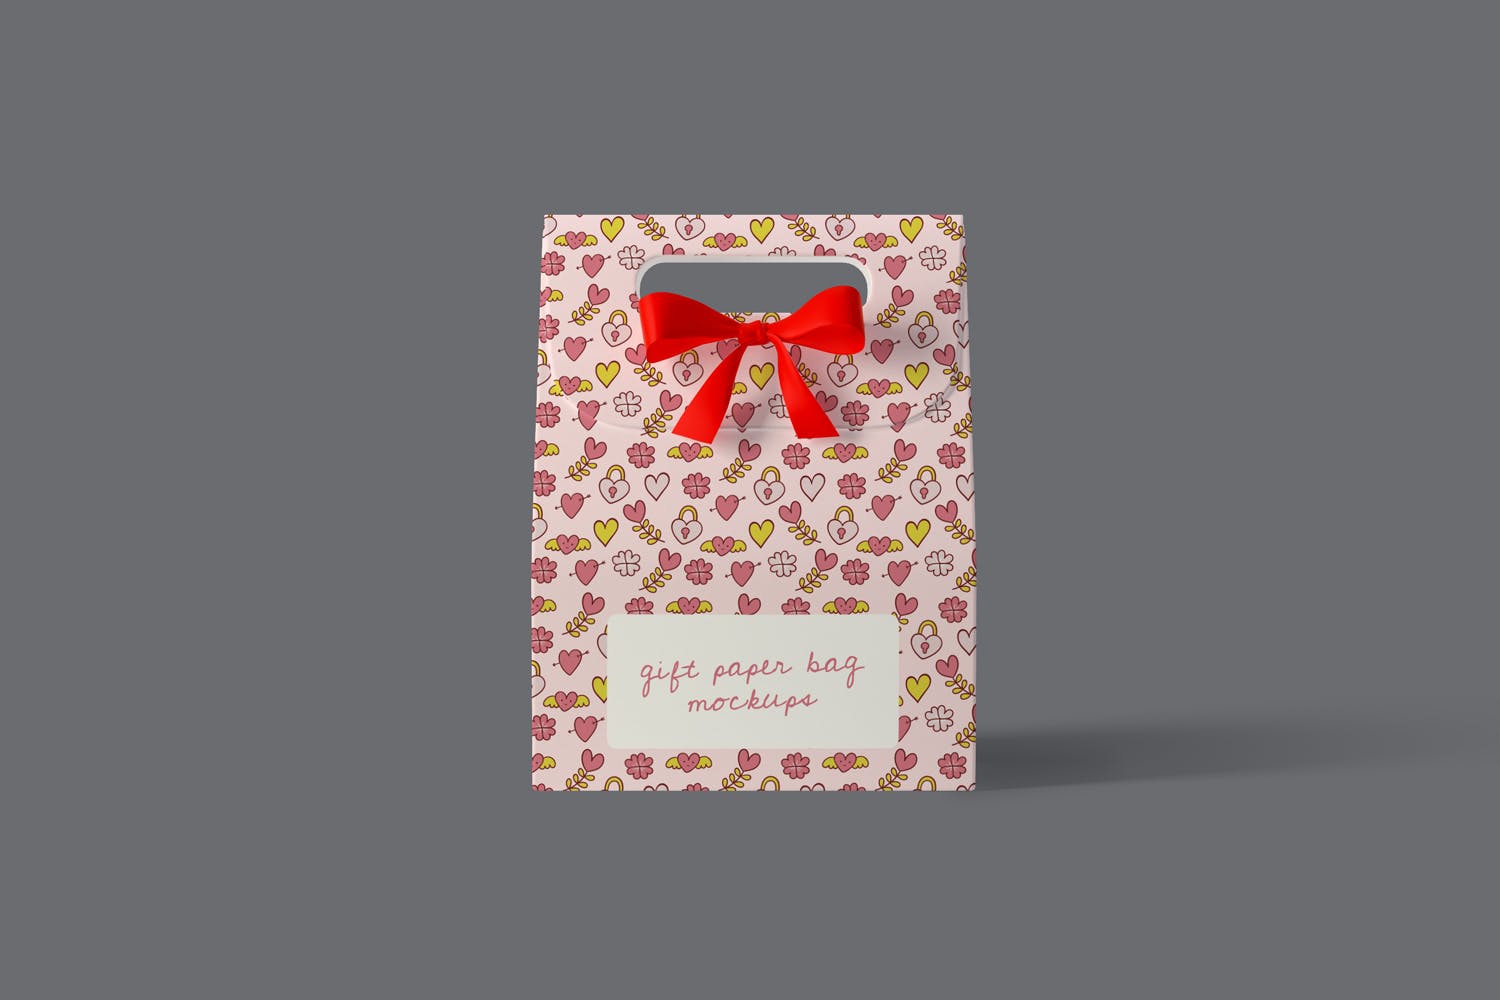 礼品纸袋外观设计图素材库精选模板 Gift Paper Bag Mockups插图(1)